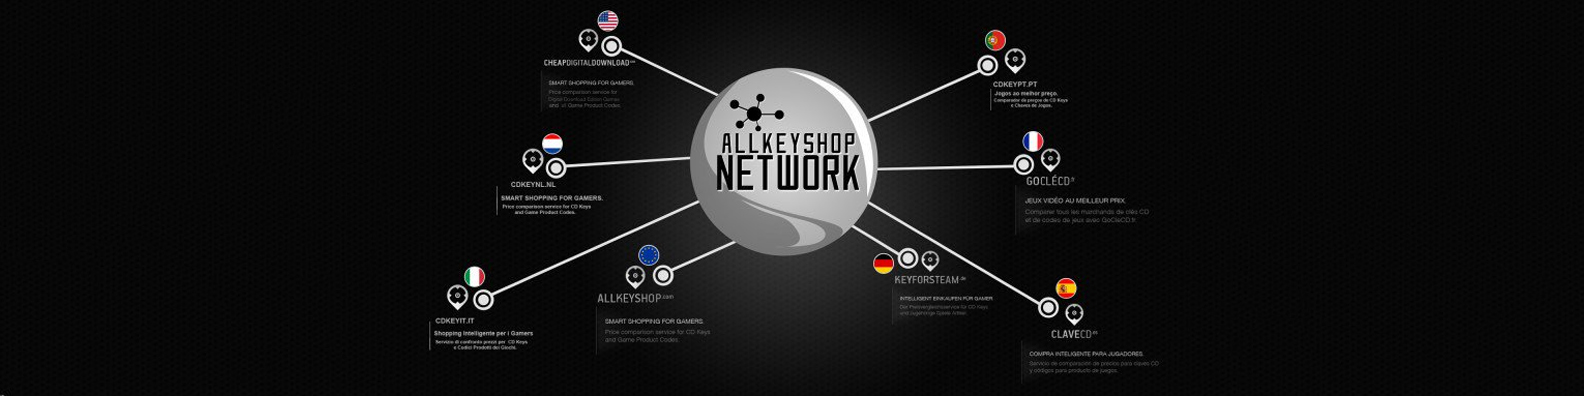 Allkeyshop network nebula